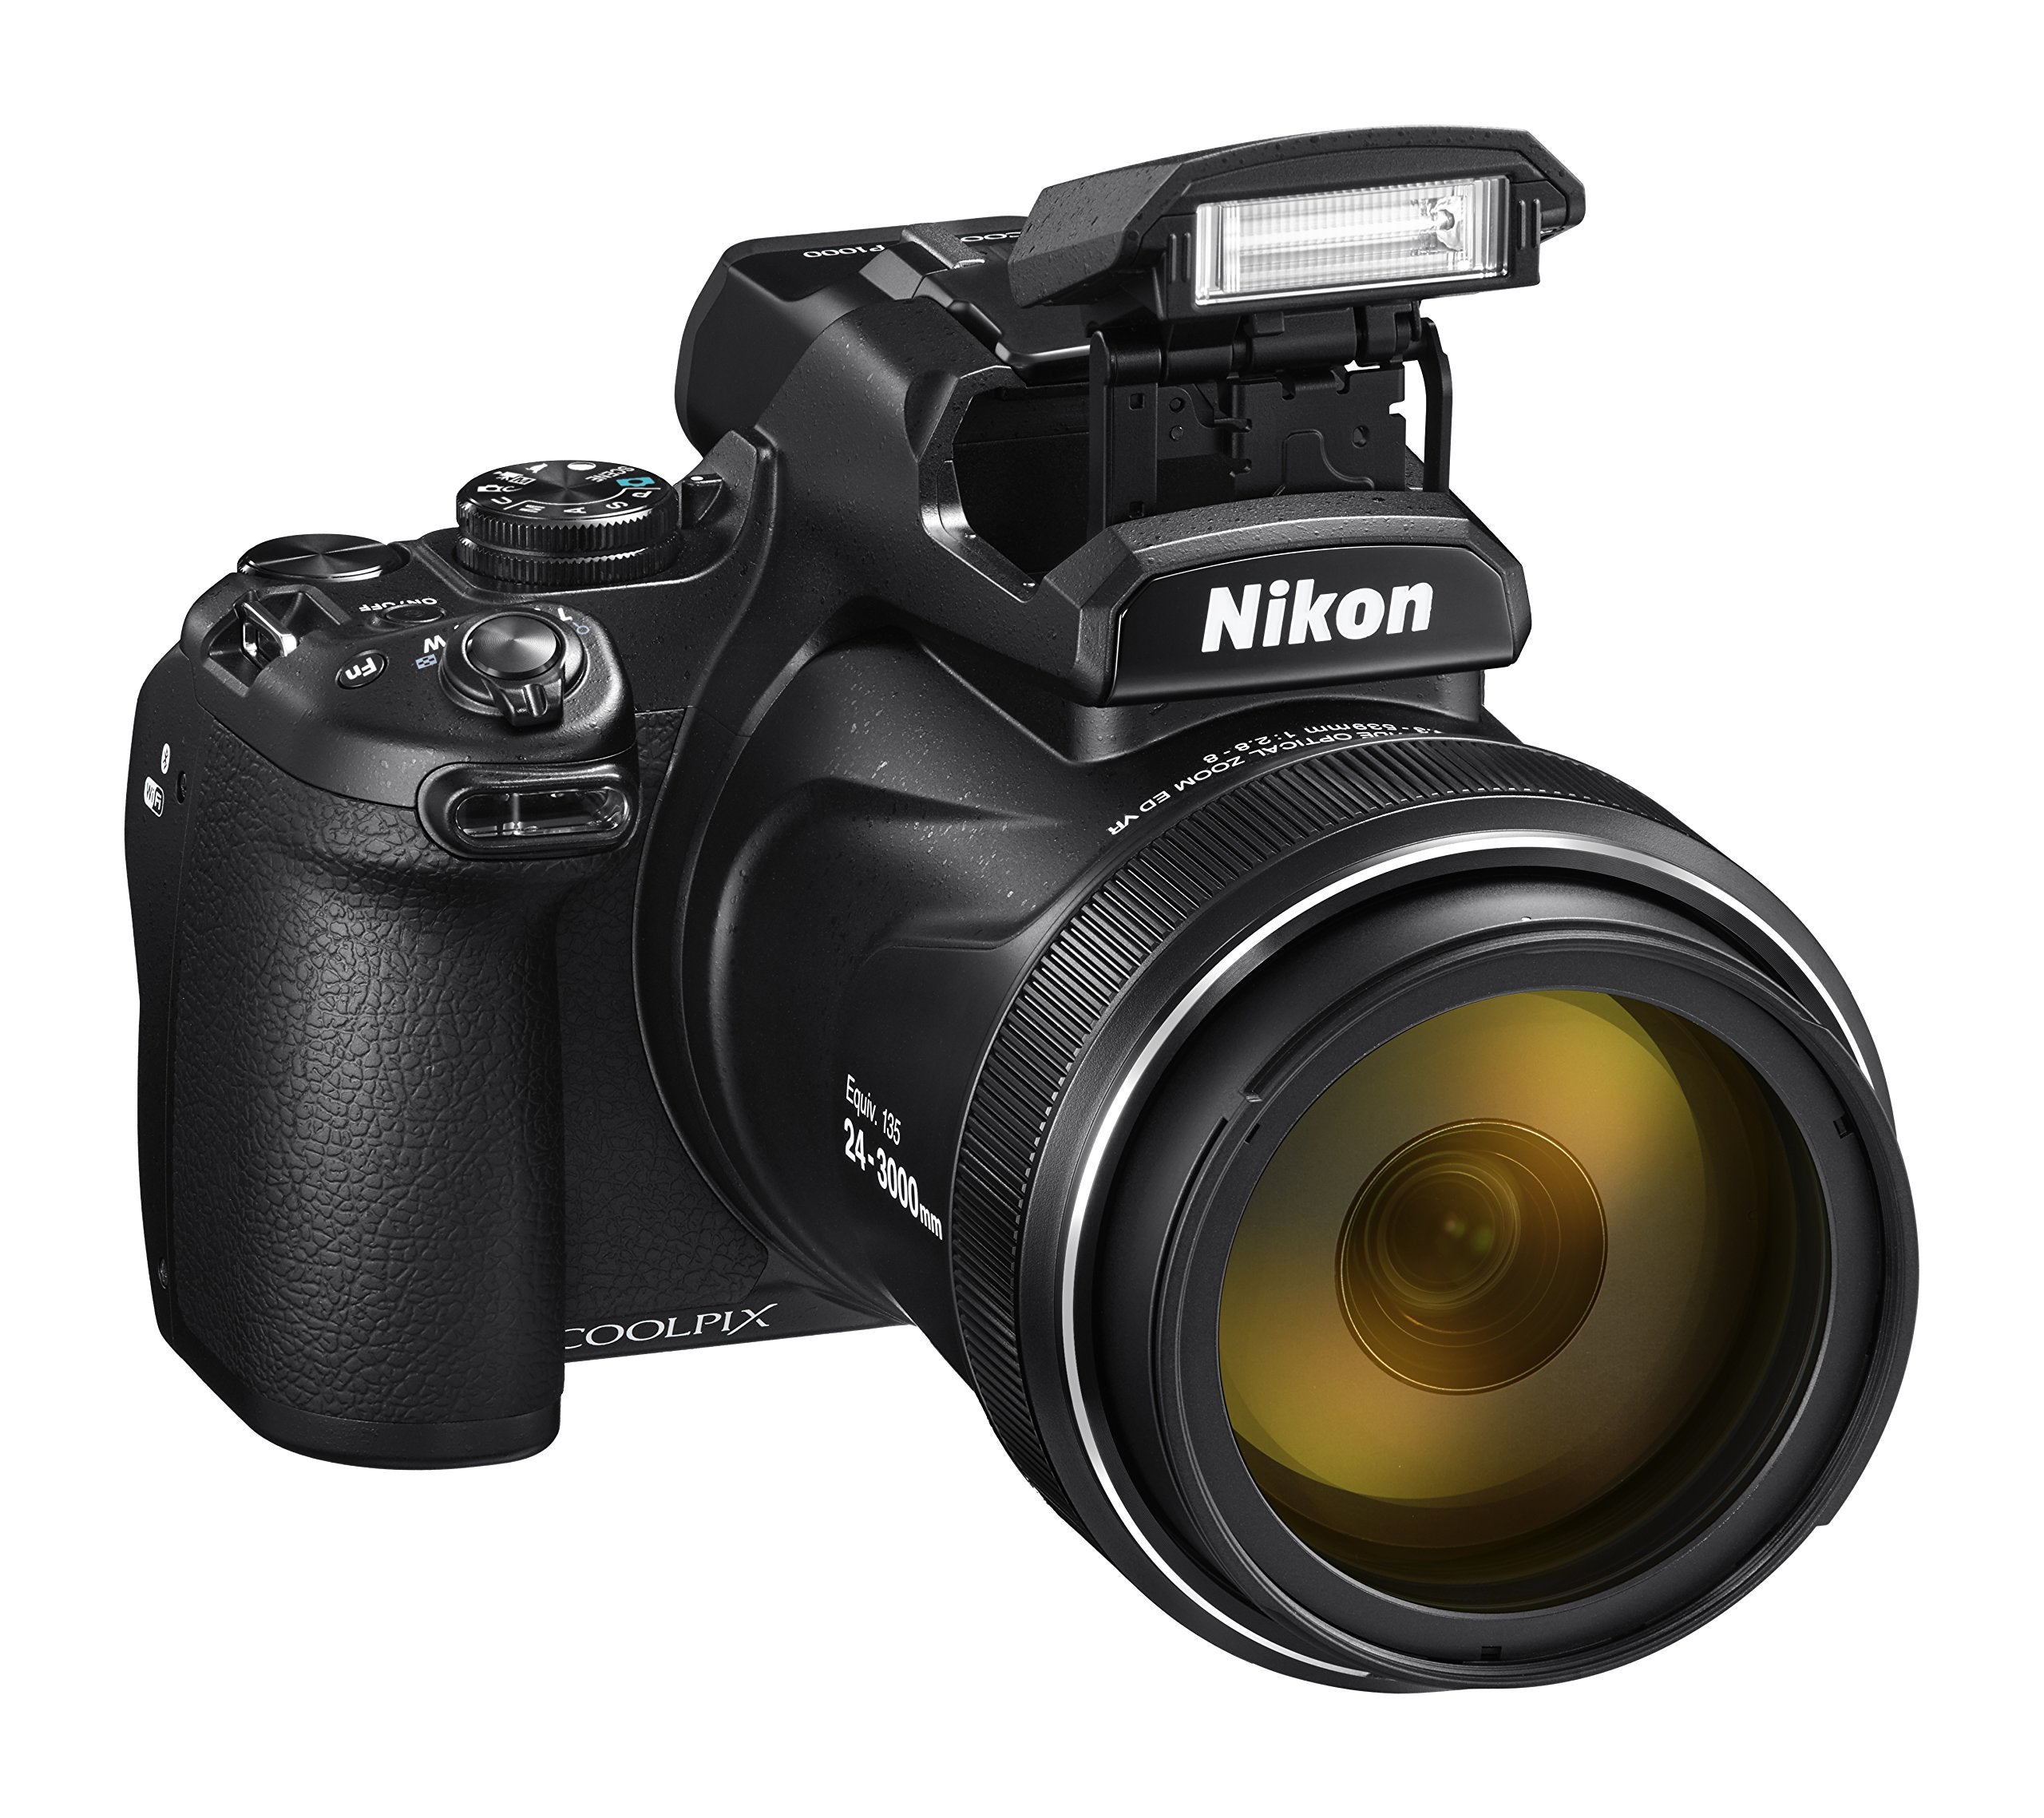 Nikon COOLPIX P1000 16.7 Digital Camera with 3.2